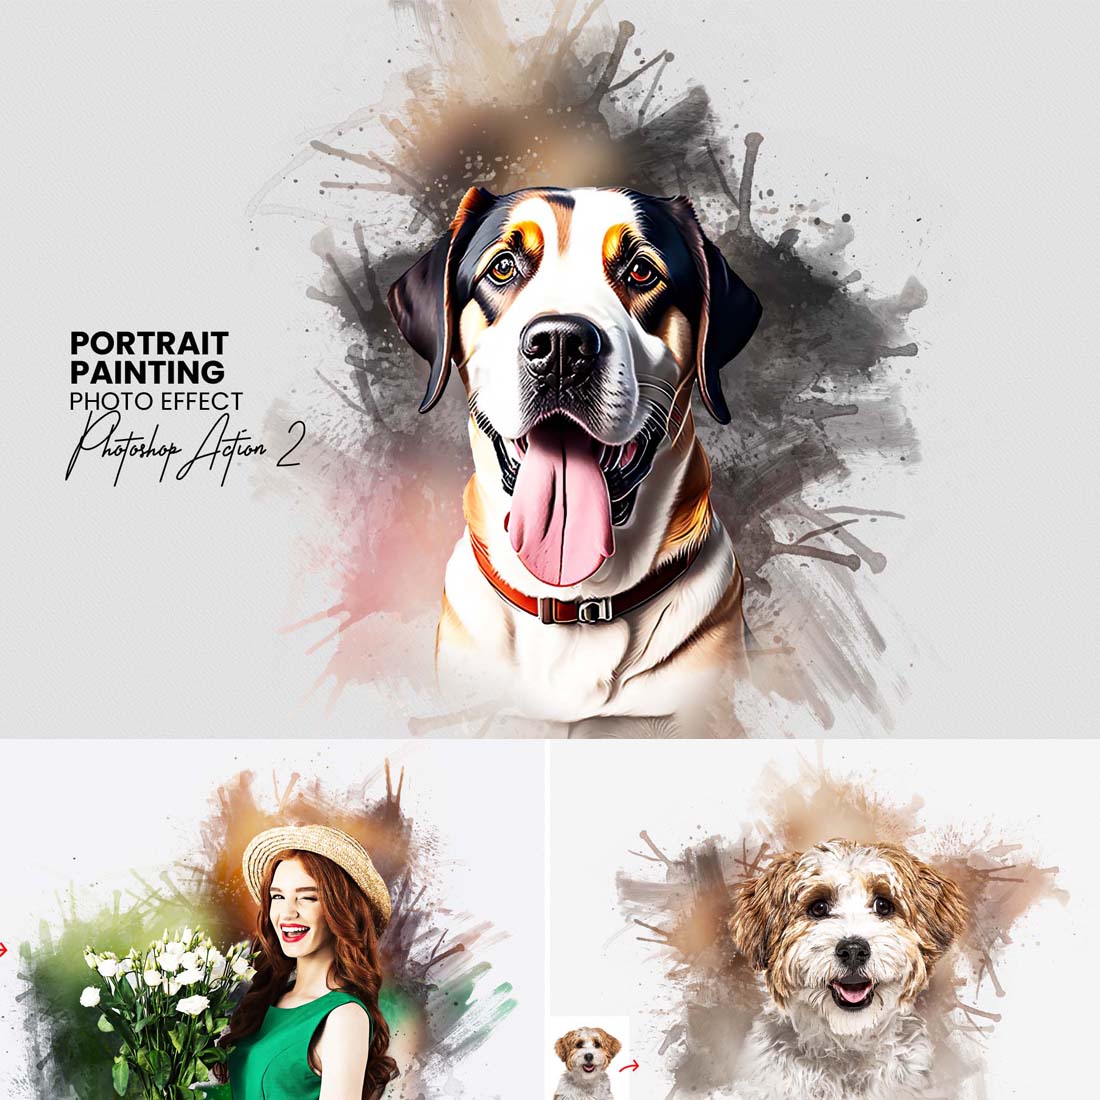 Portrait Painting Photoshop Action cover image.